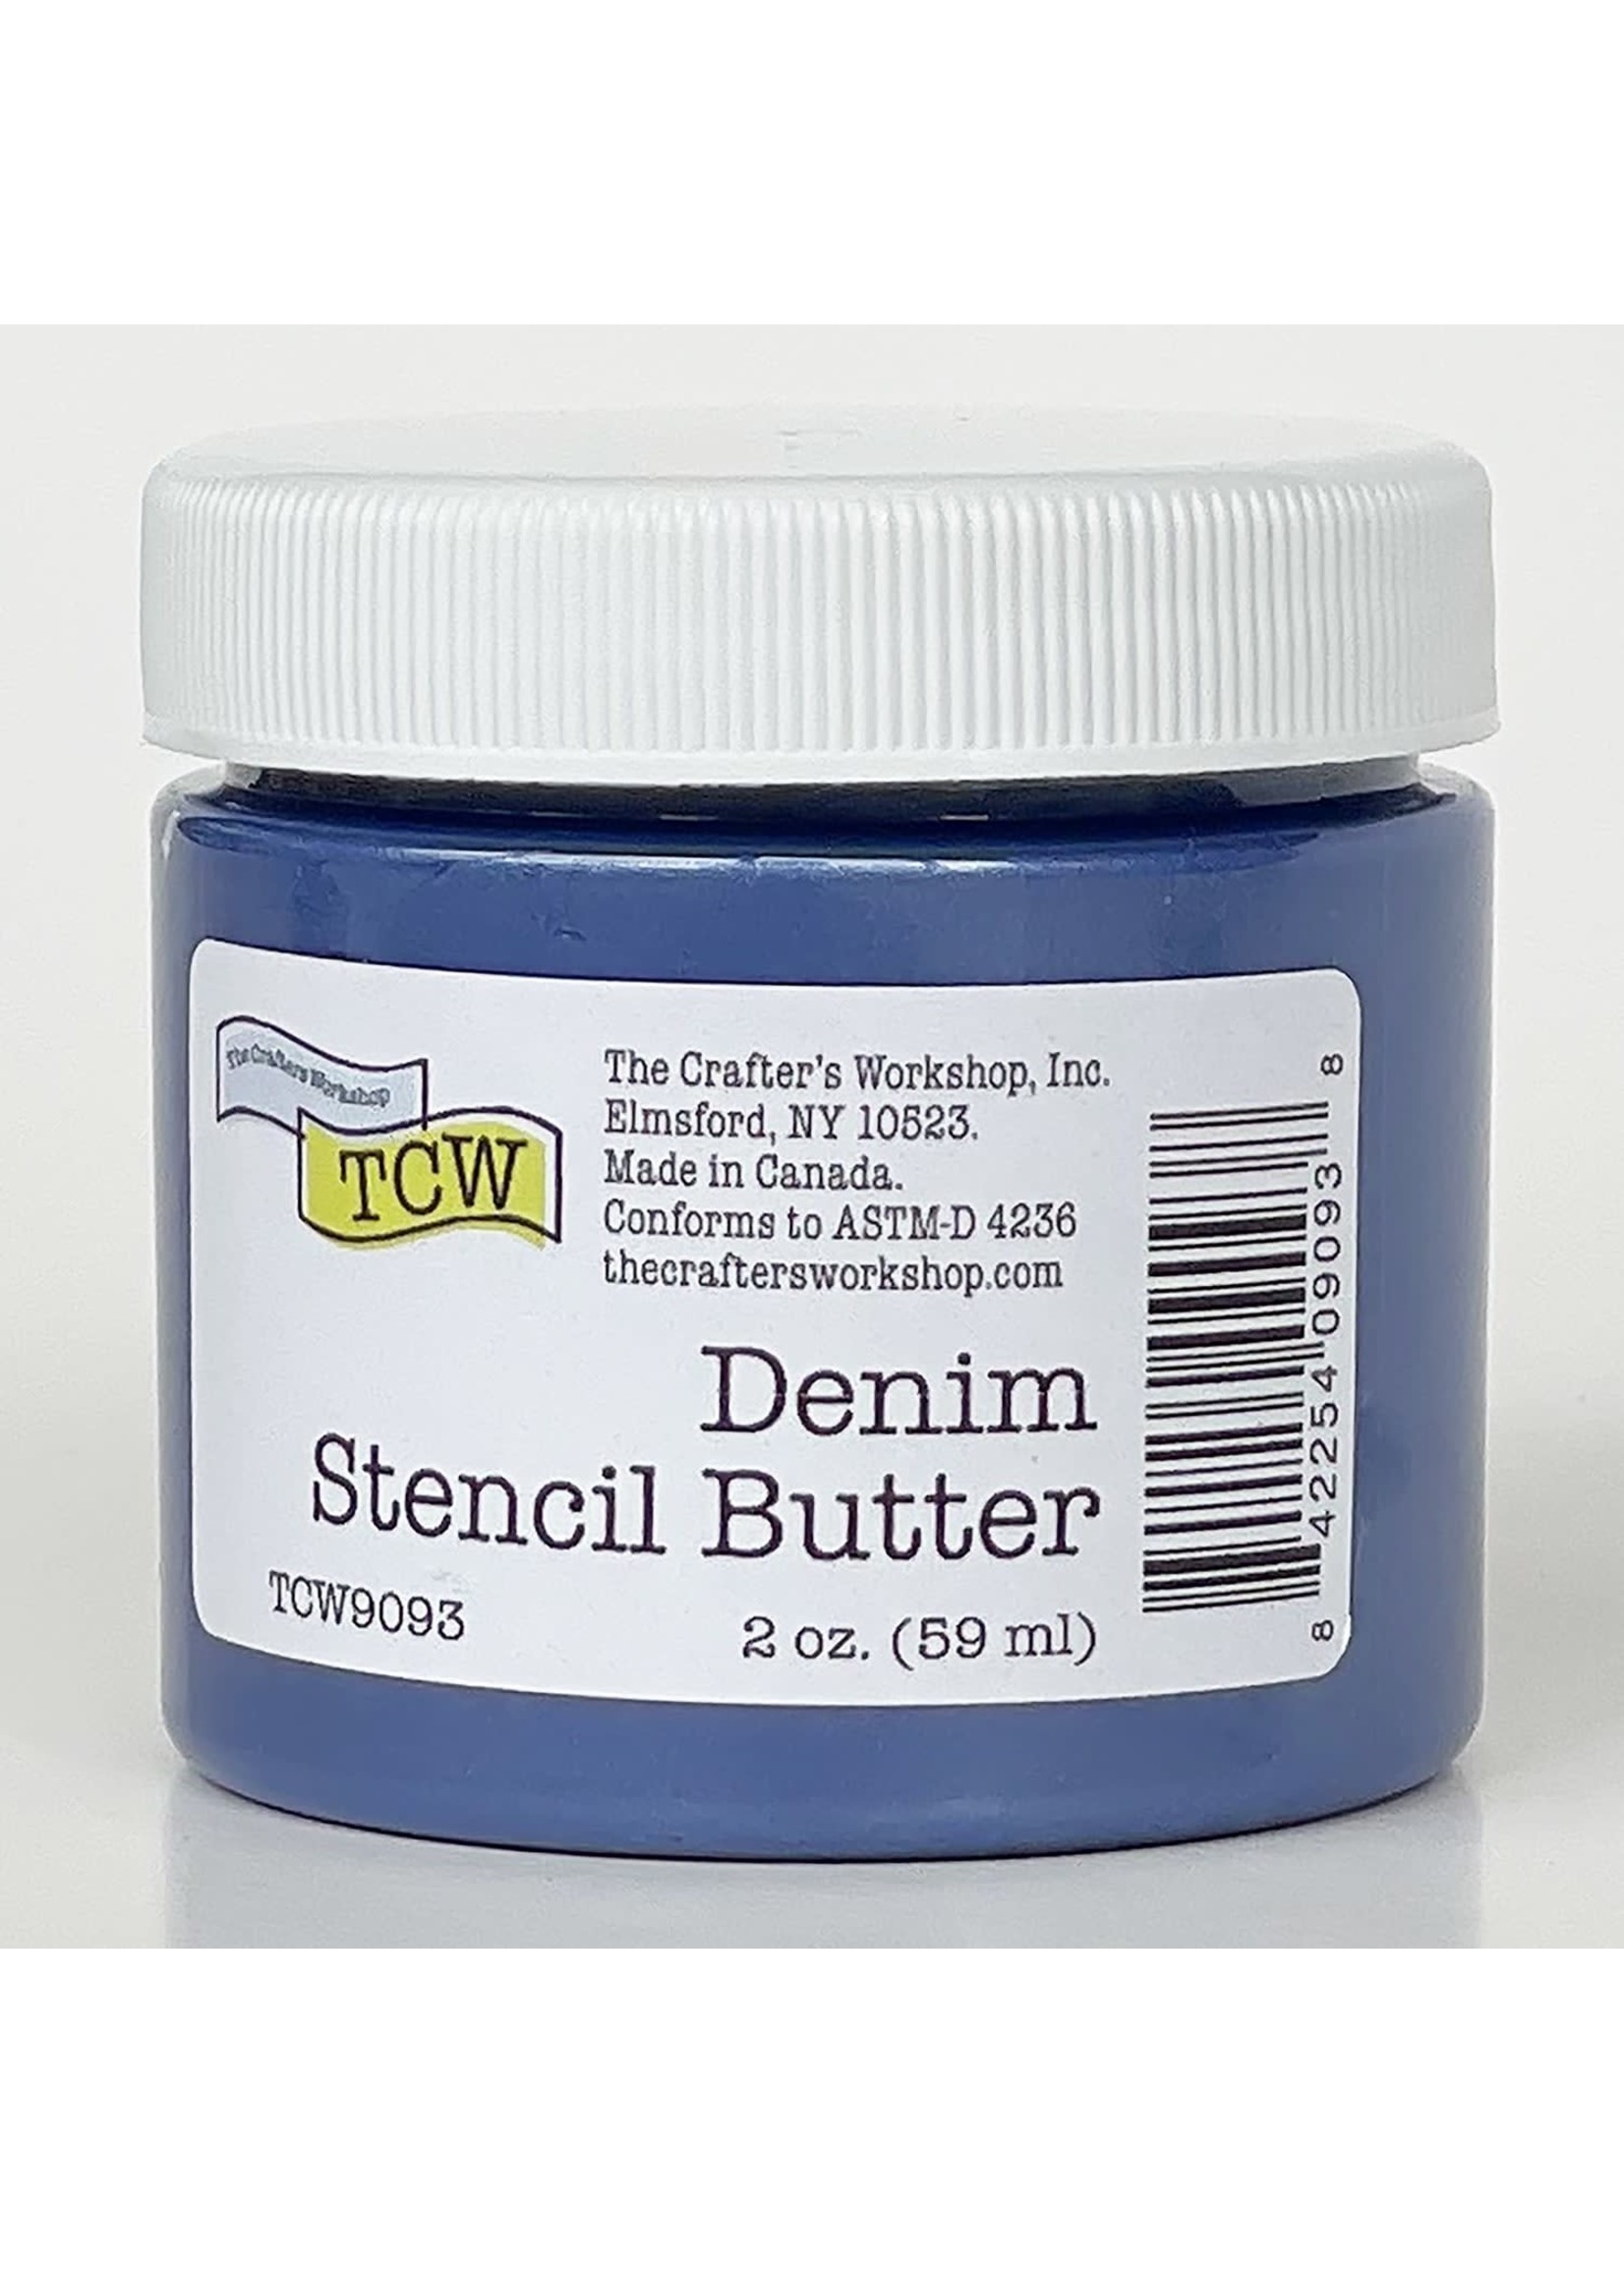 The Crafters Workshop Stencil Butter: Denim